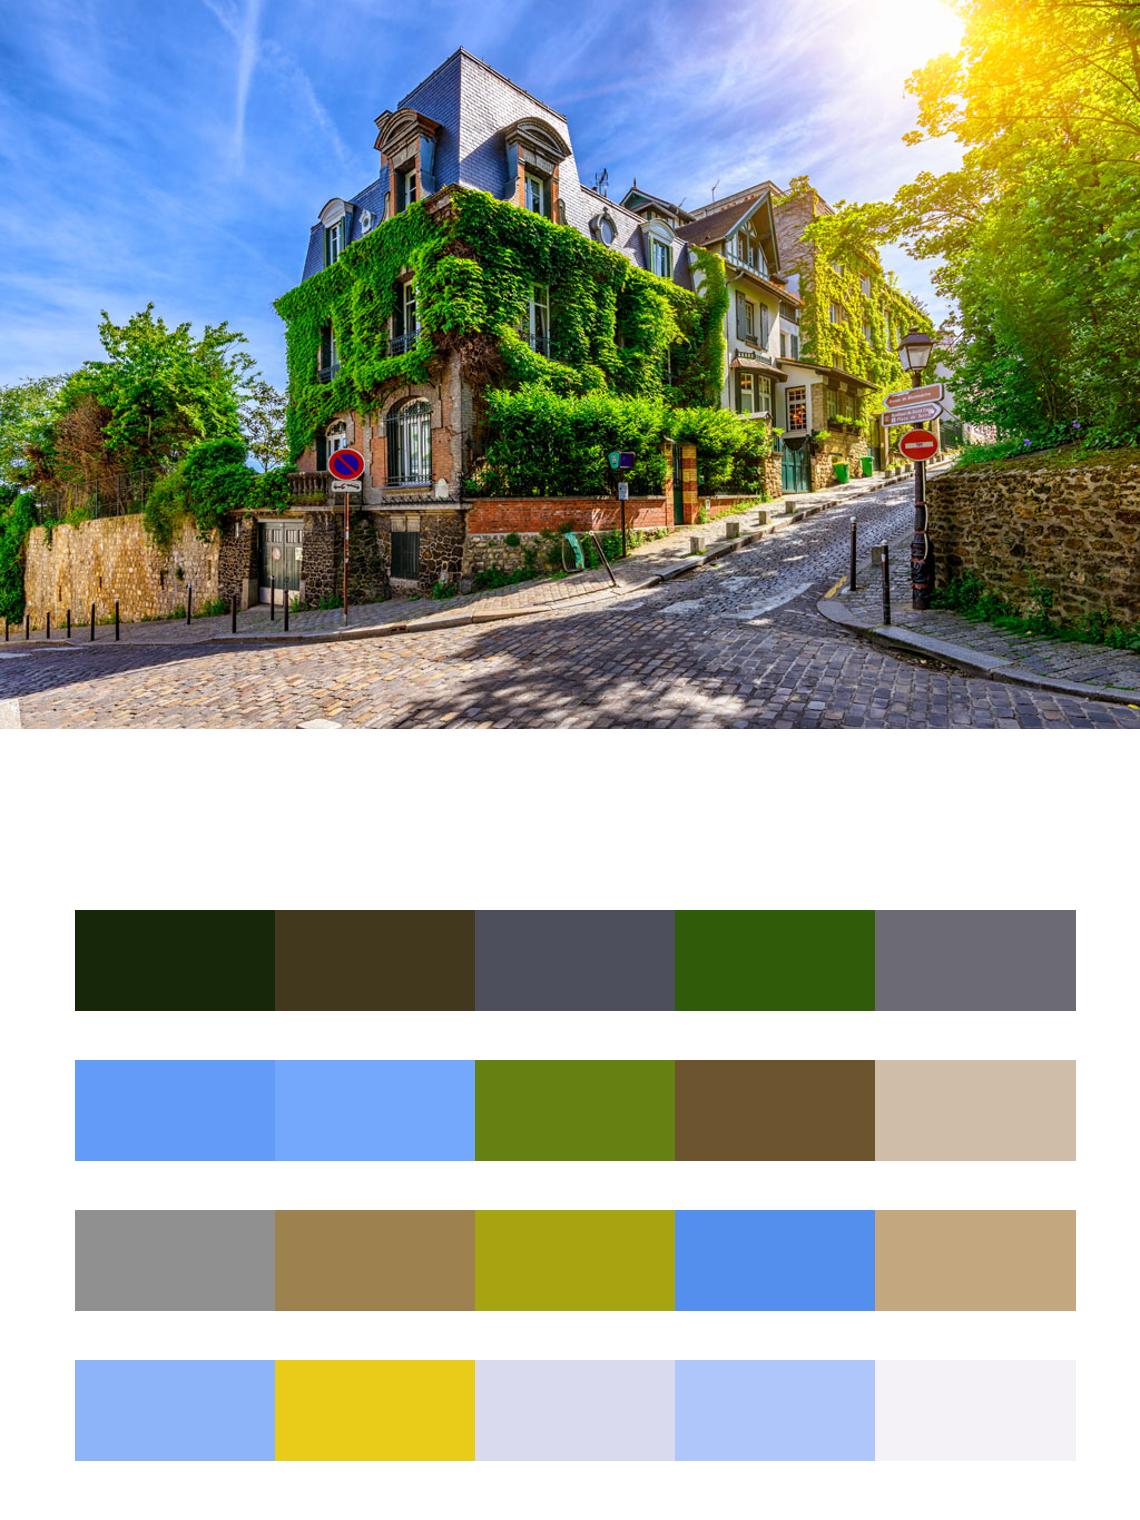 Солнечная улочка Парижа цвета